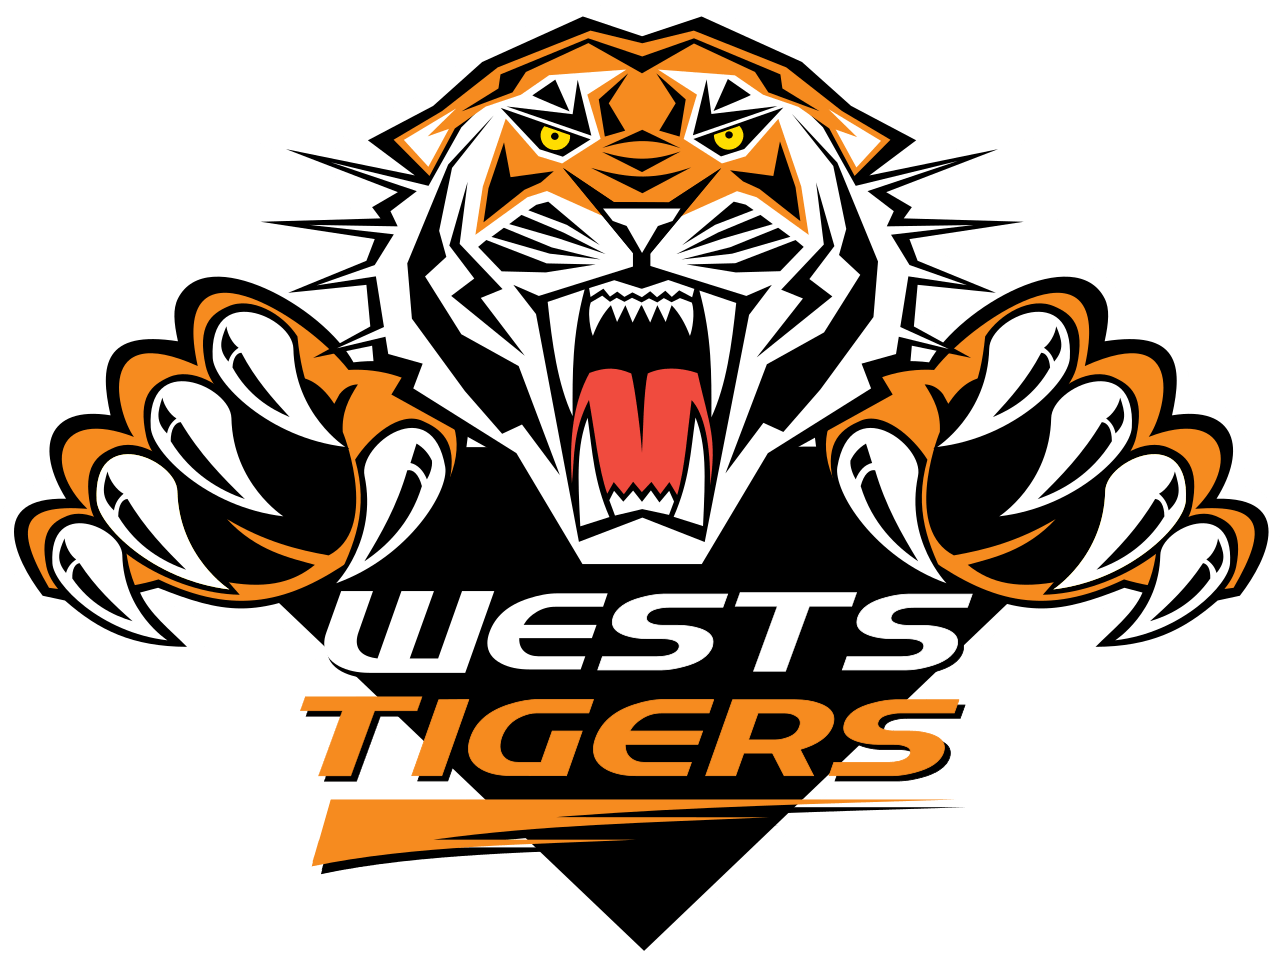 Tigers Logo - Image - 1280px-Wests Tigers logo.svg.png | Logopedia | FANDOM ...